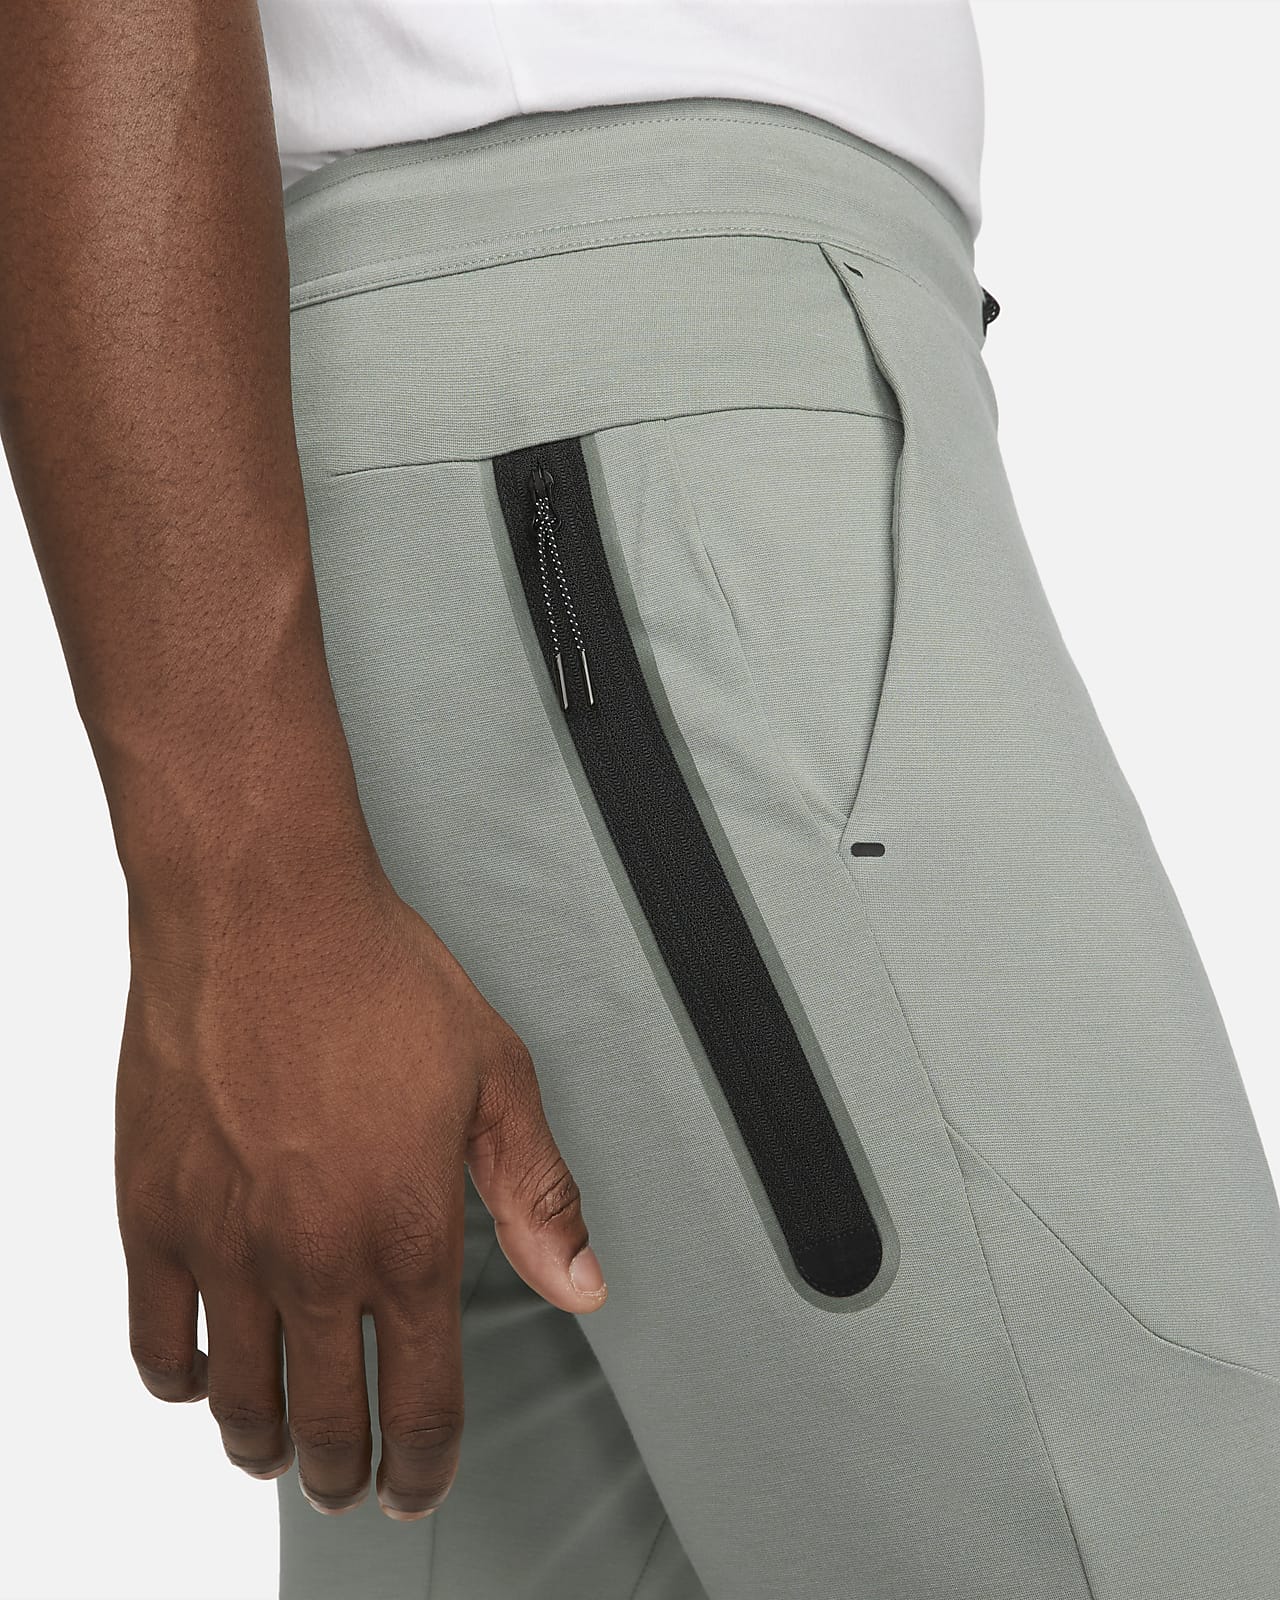  Black Joggers for Men Men's Tech Fleece Active Athletic Casual  Jogger Sweatpants with Pockets Sweatpants for Men with Pockets m2lk :  Sports & Outdoors